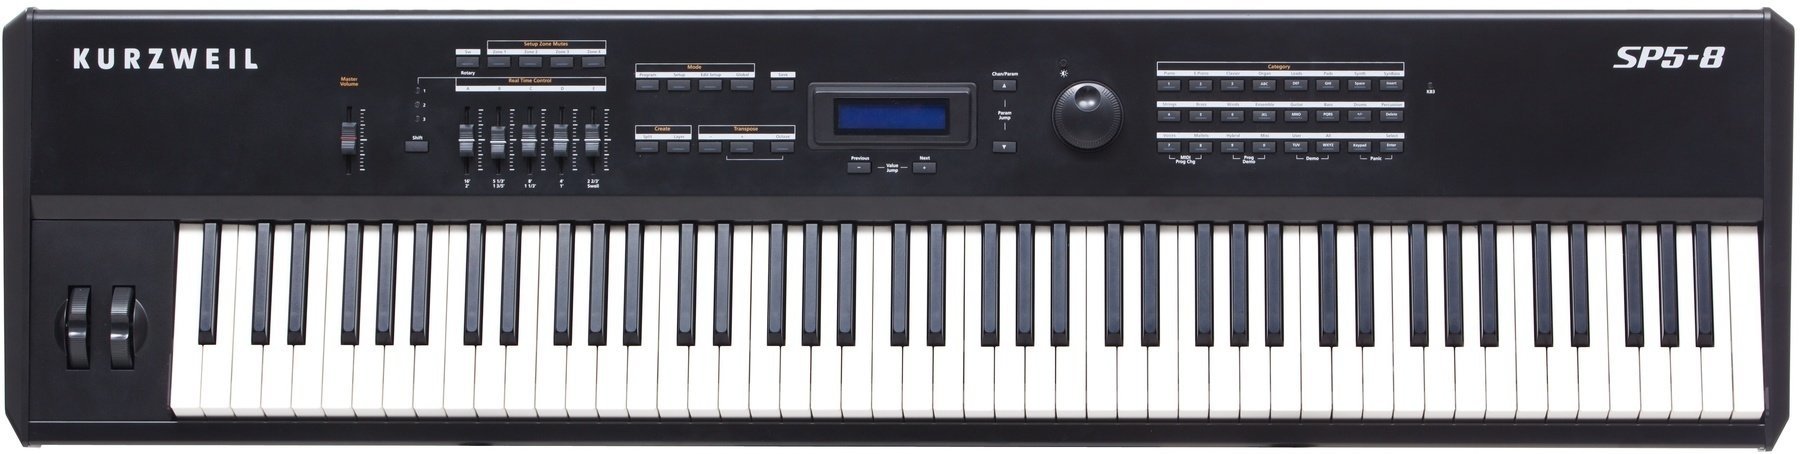 Digitralni koncertni pianino Kurzweil SP5-8